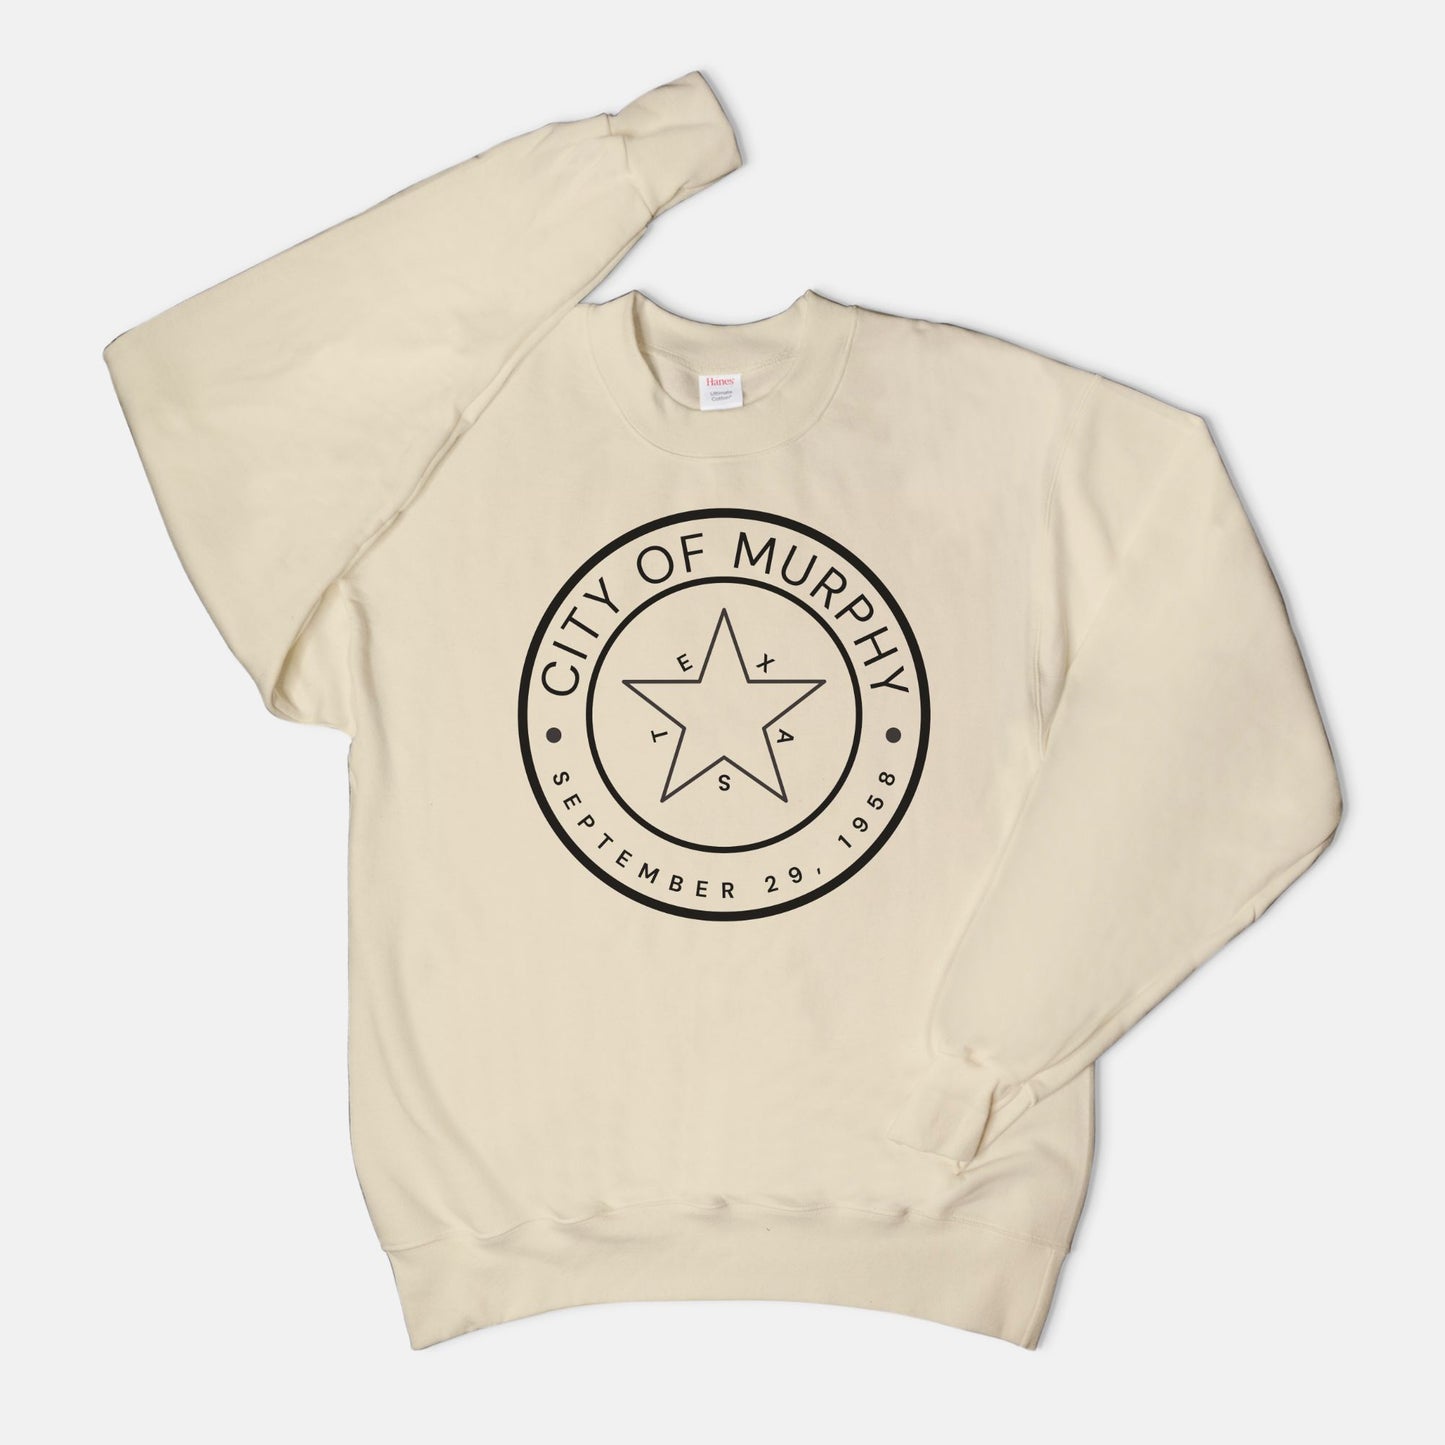 Classic City Seal sweatshirt